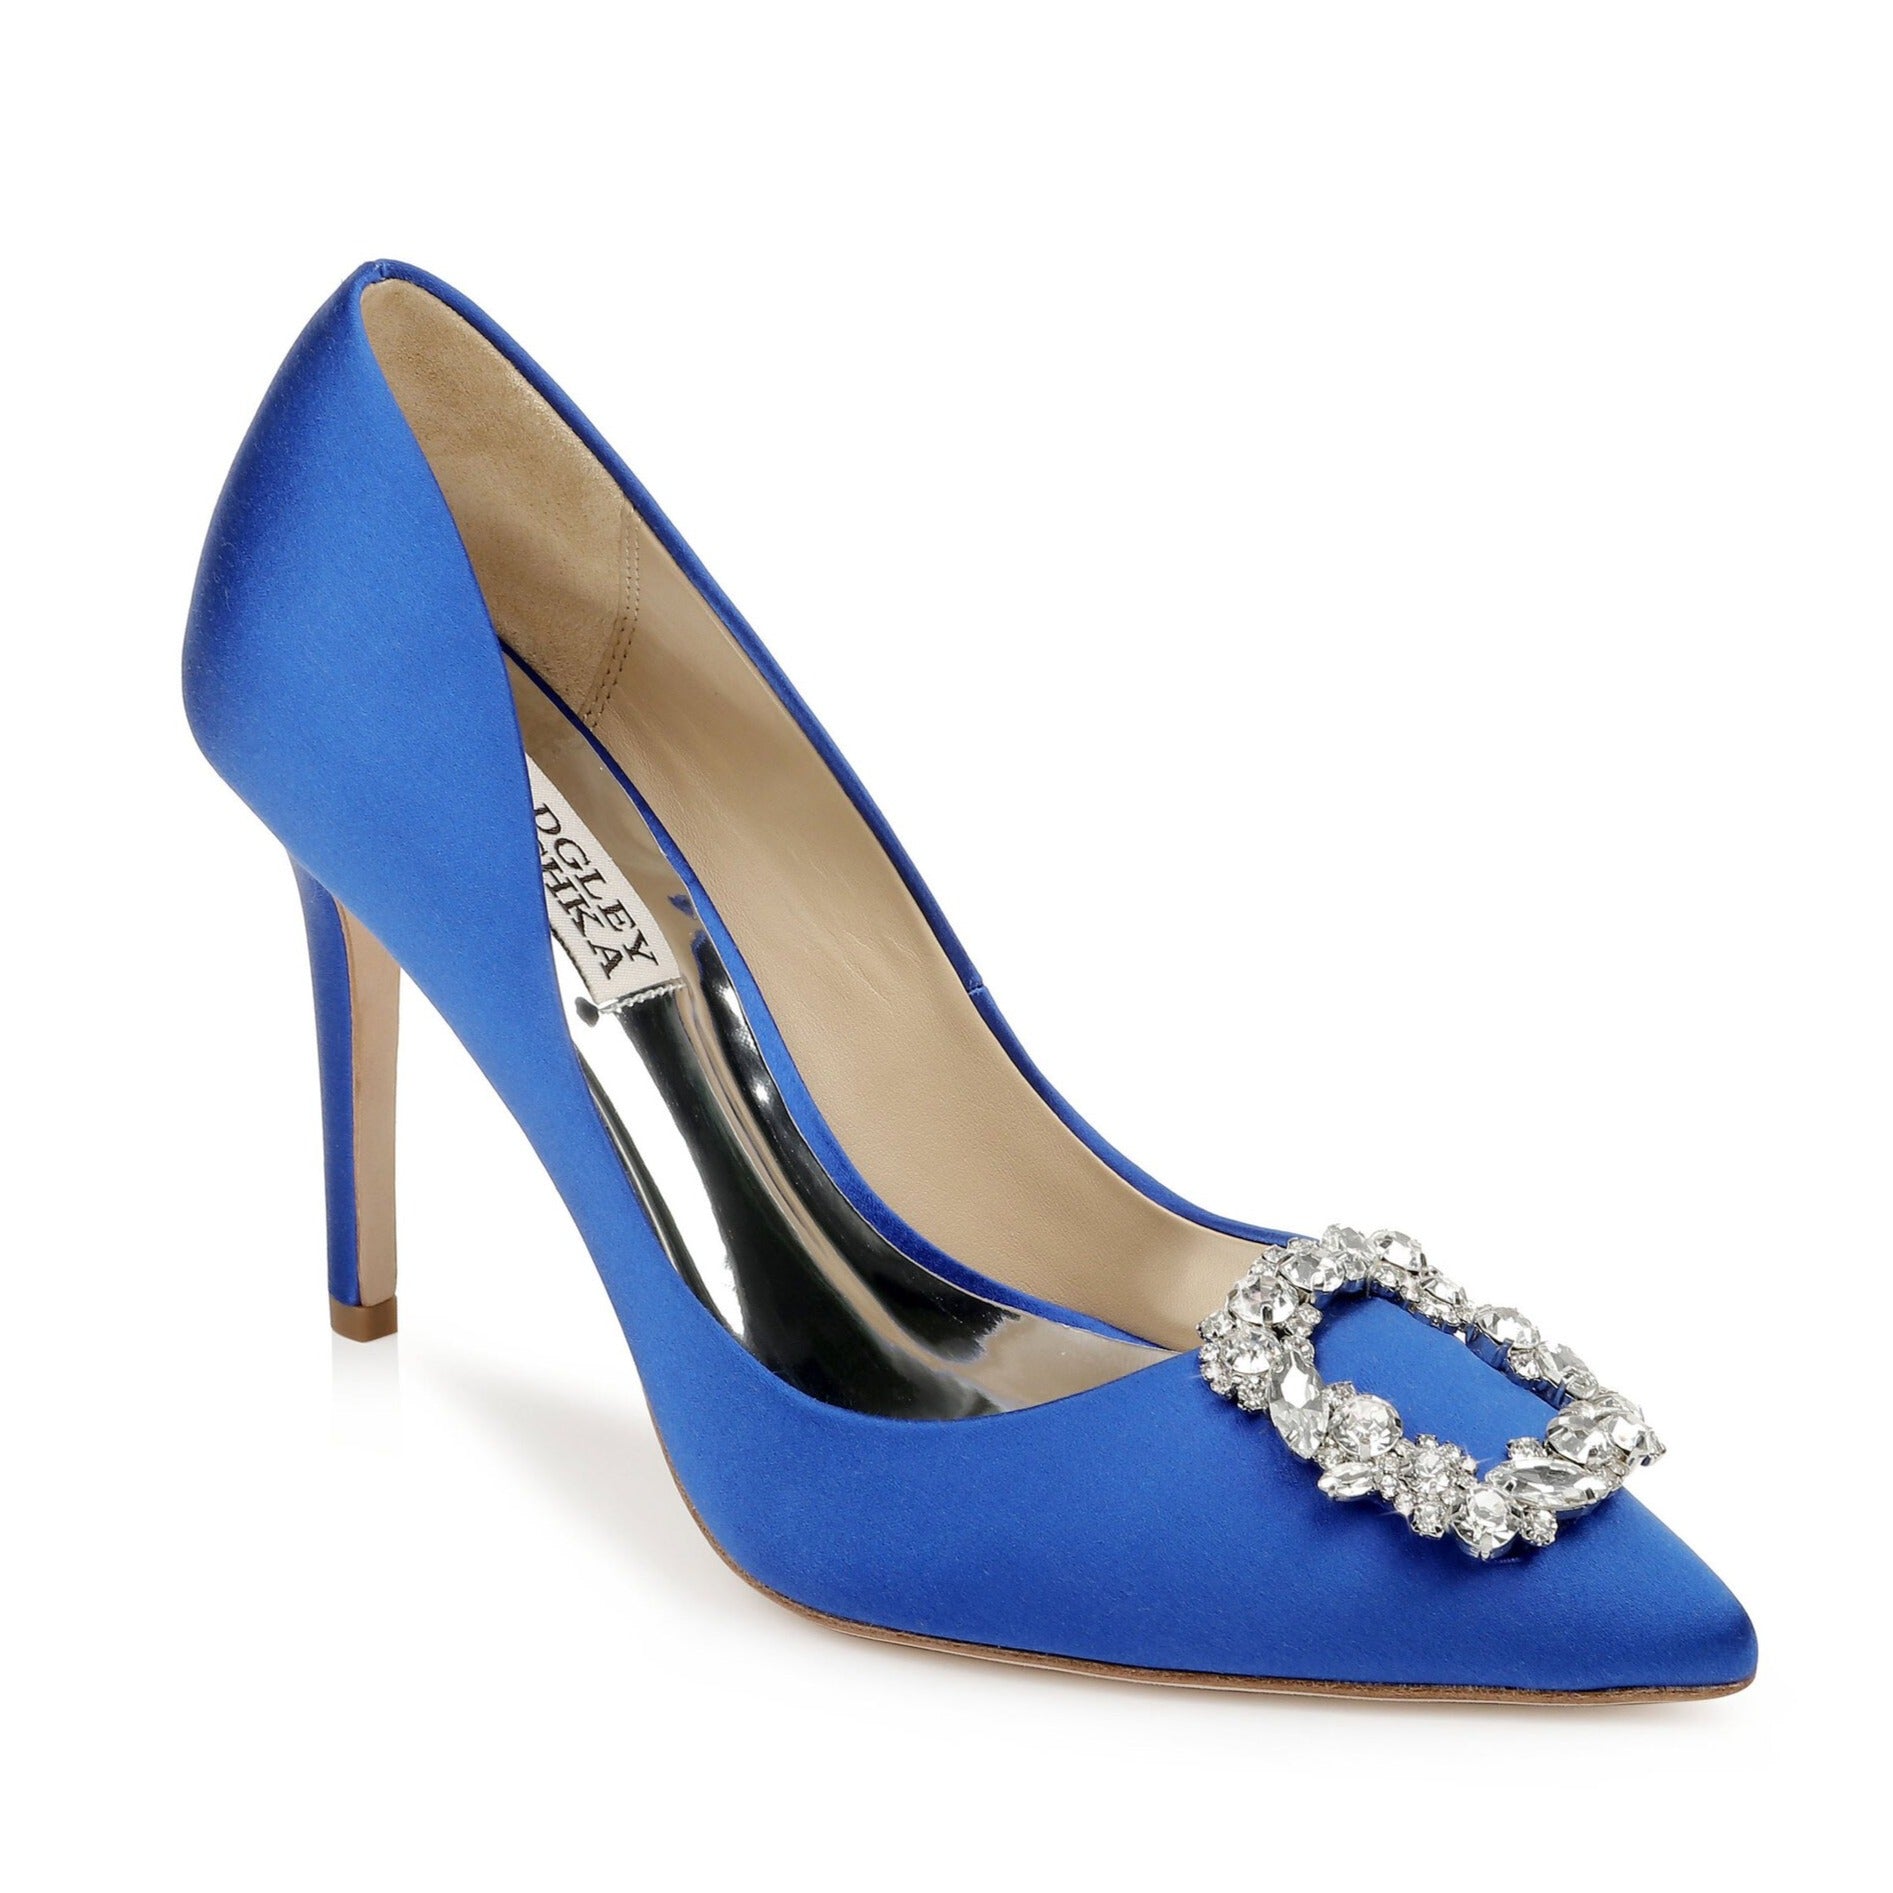 Badgley Mischka Cher Buckle Pointed Wedding Shoes - Blue